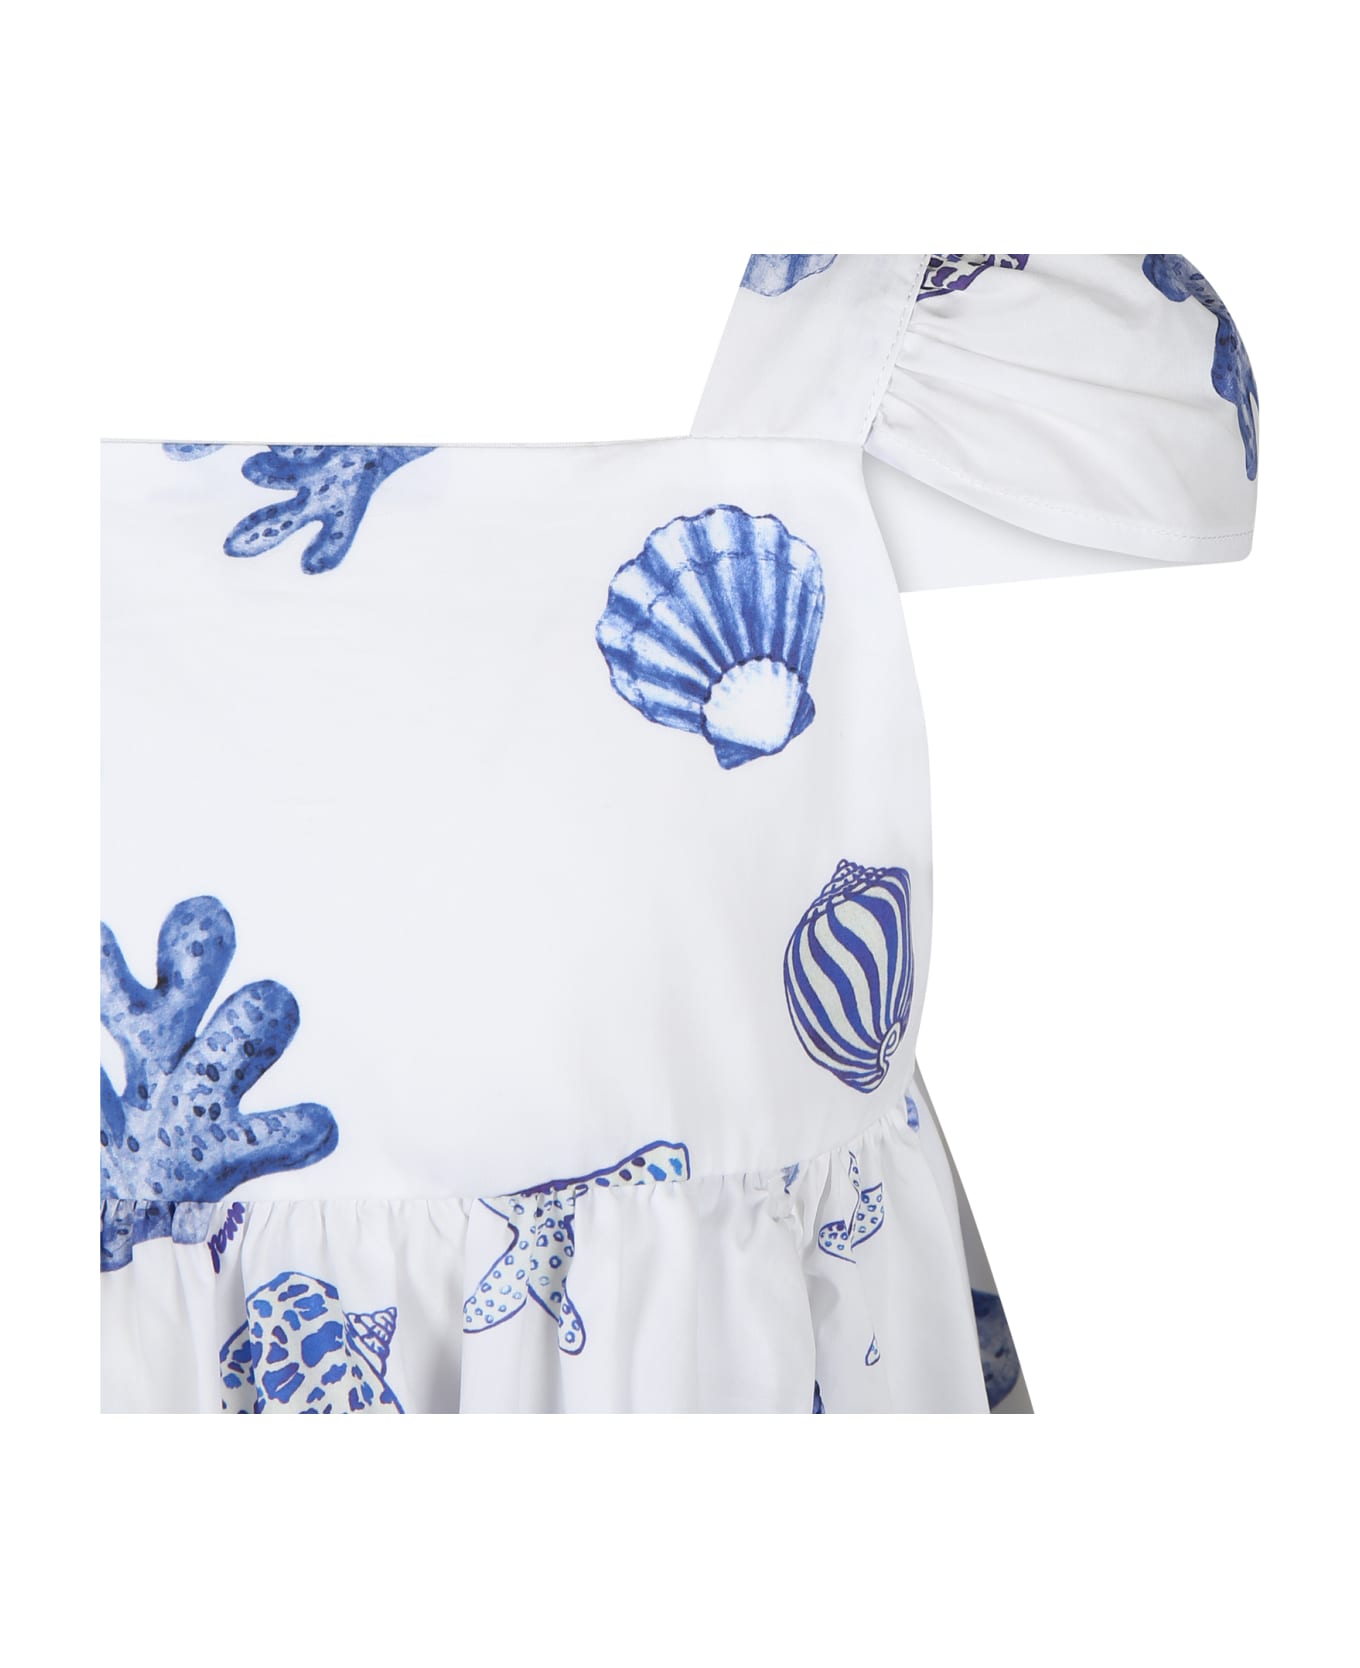 Monnalisa White Dress For Girl With Seashell Print - White